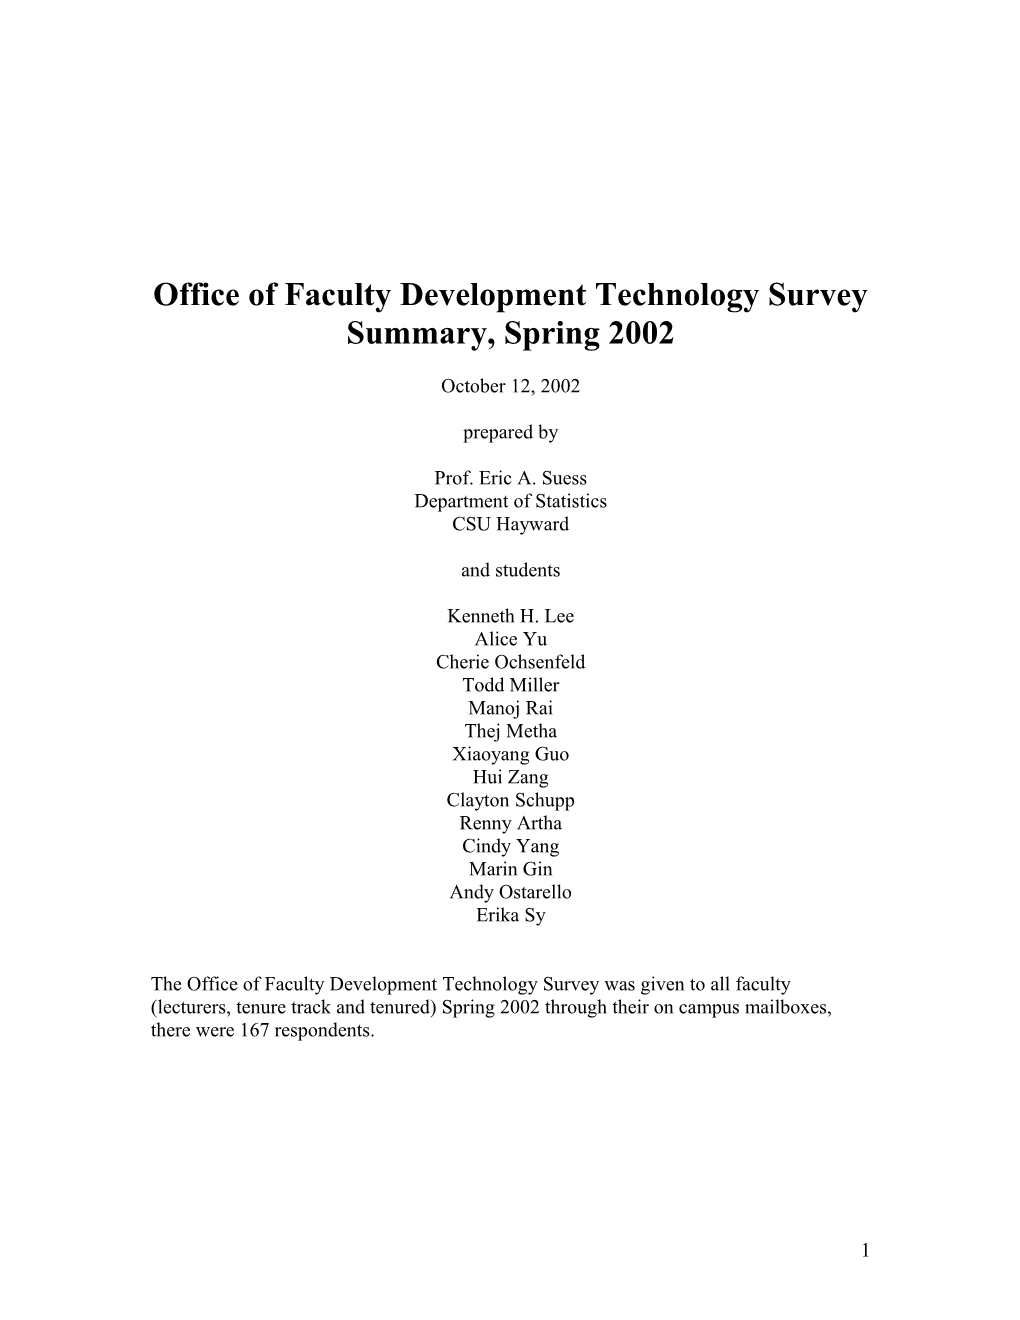 Office of Faculty Development Technology Survey Summary, Spring 2002